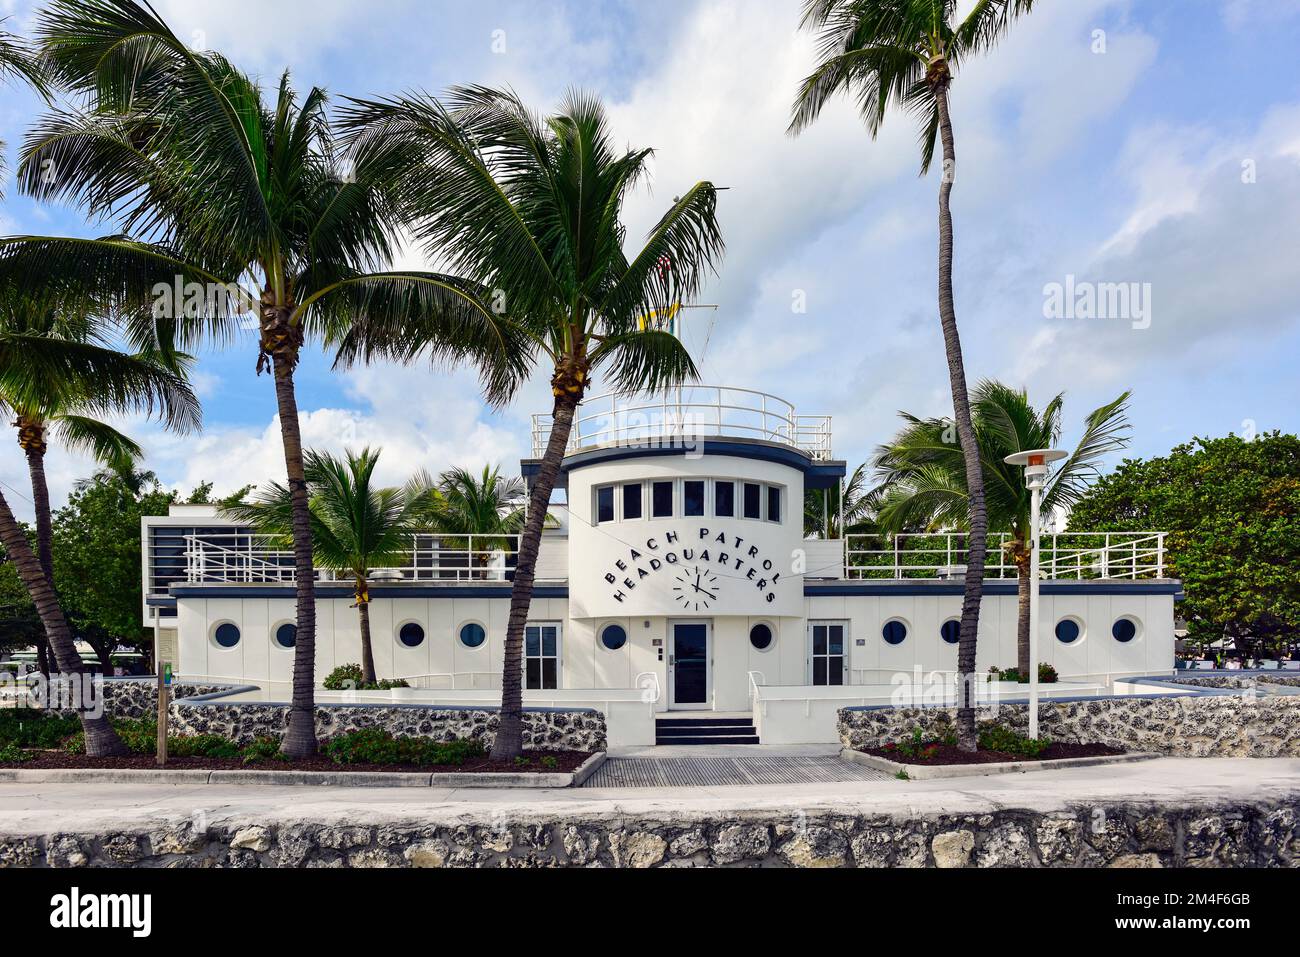 The Beach Patrol Headquarters in the Historic Art Deco District in South Beach, Miami, Florida. Stock Photo